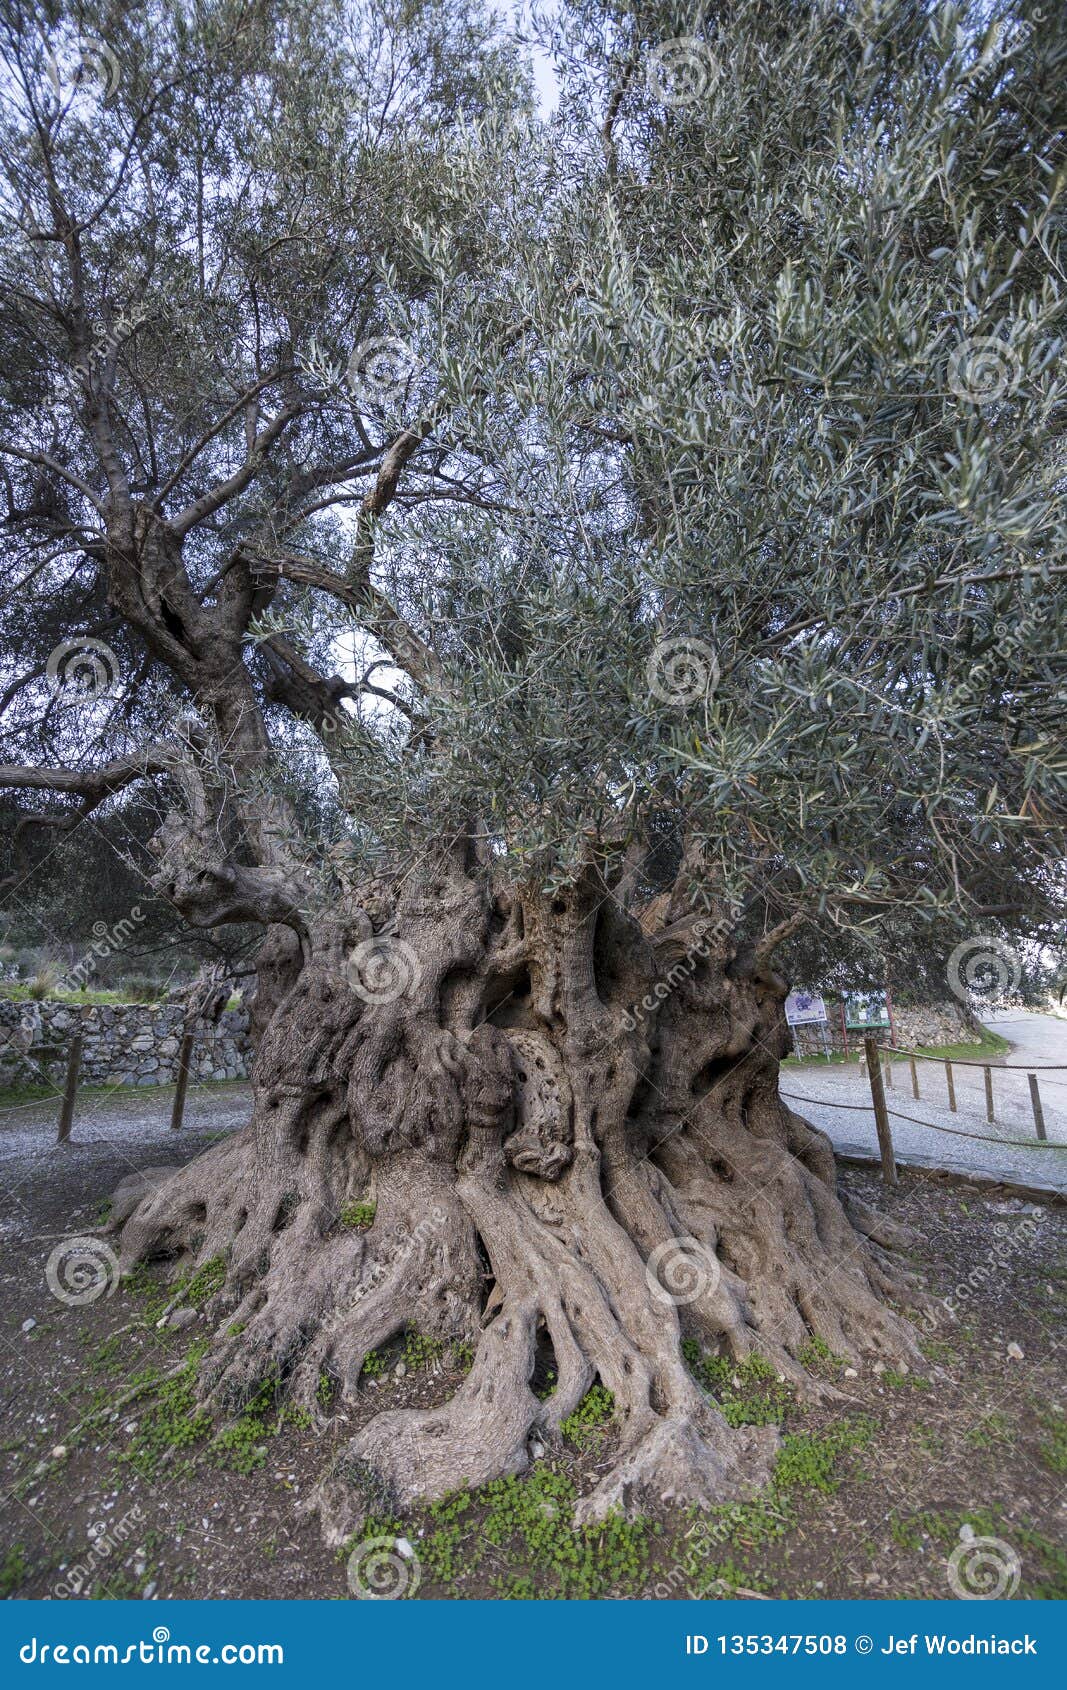 big millenary olive tree near the antique city of azoria